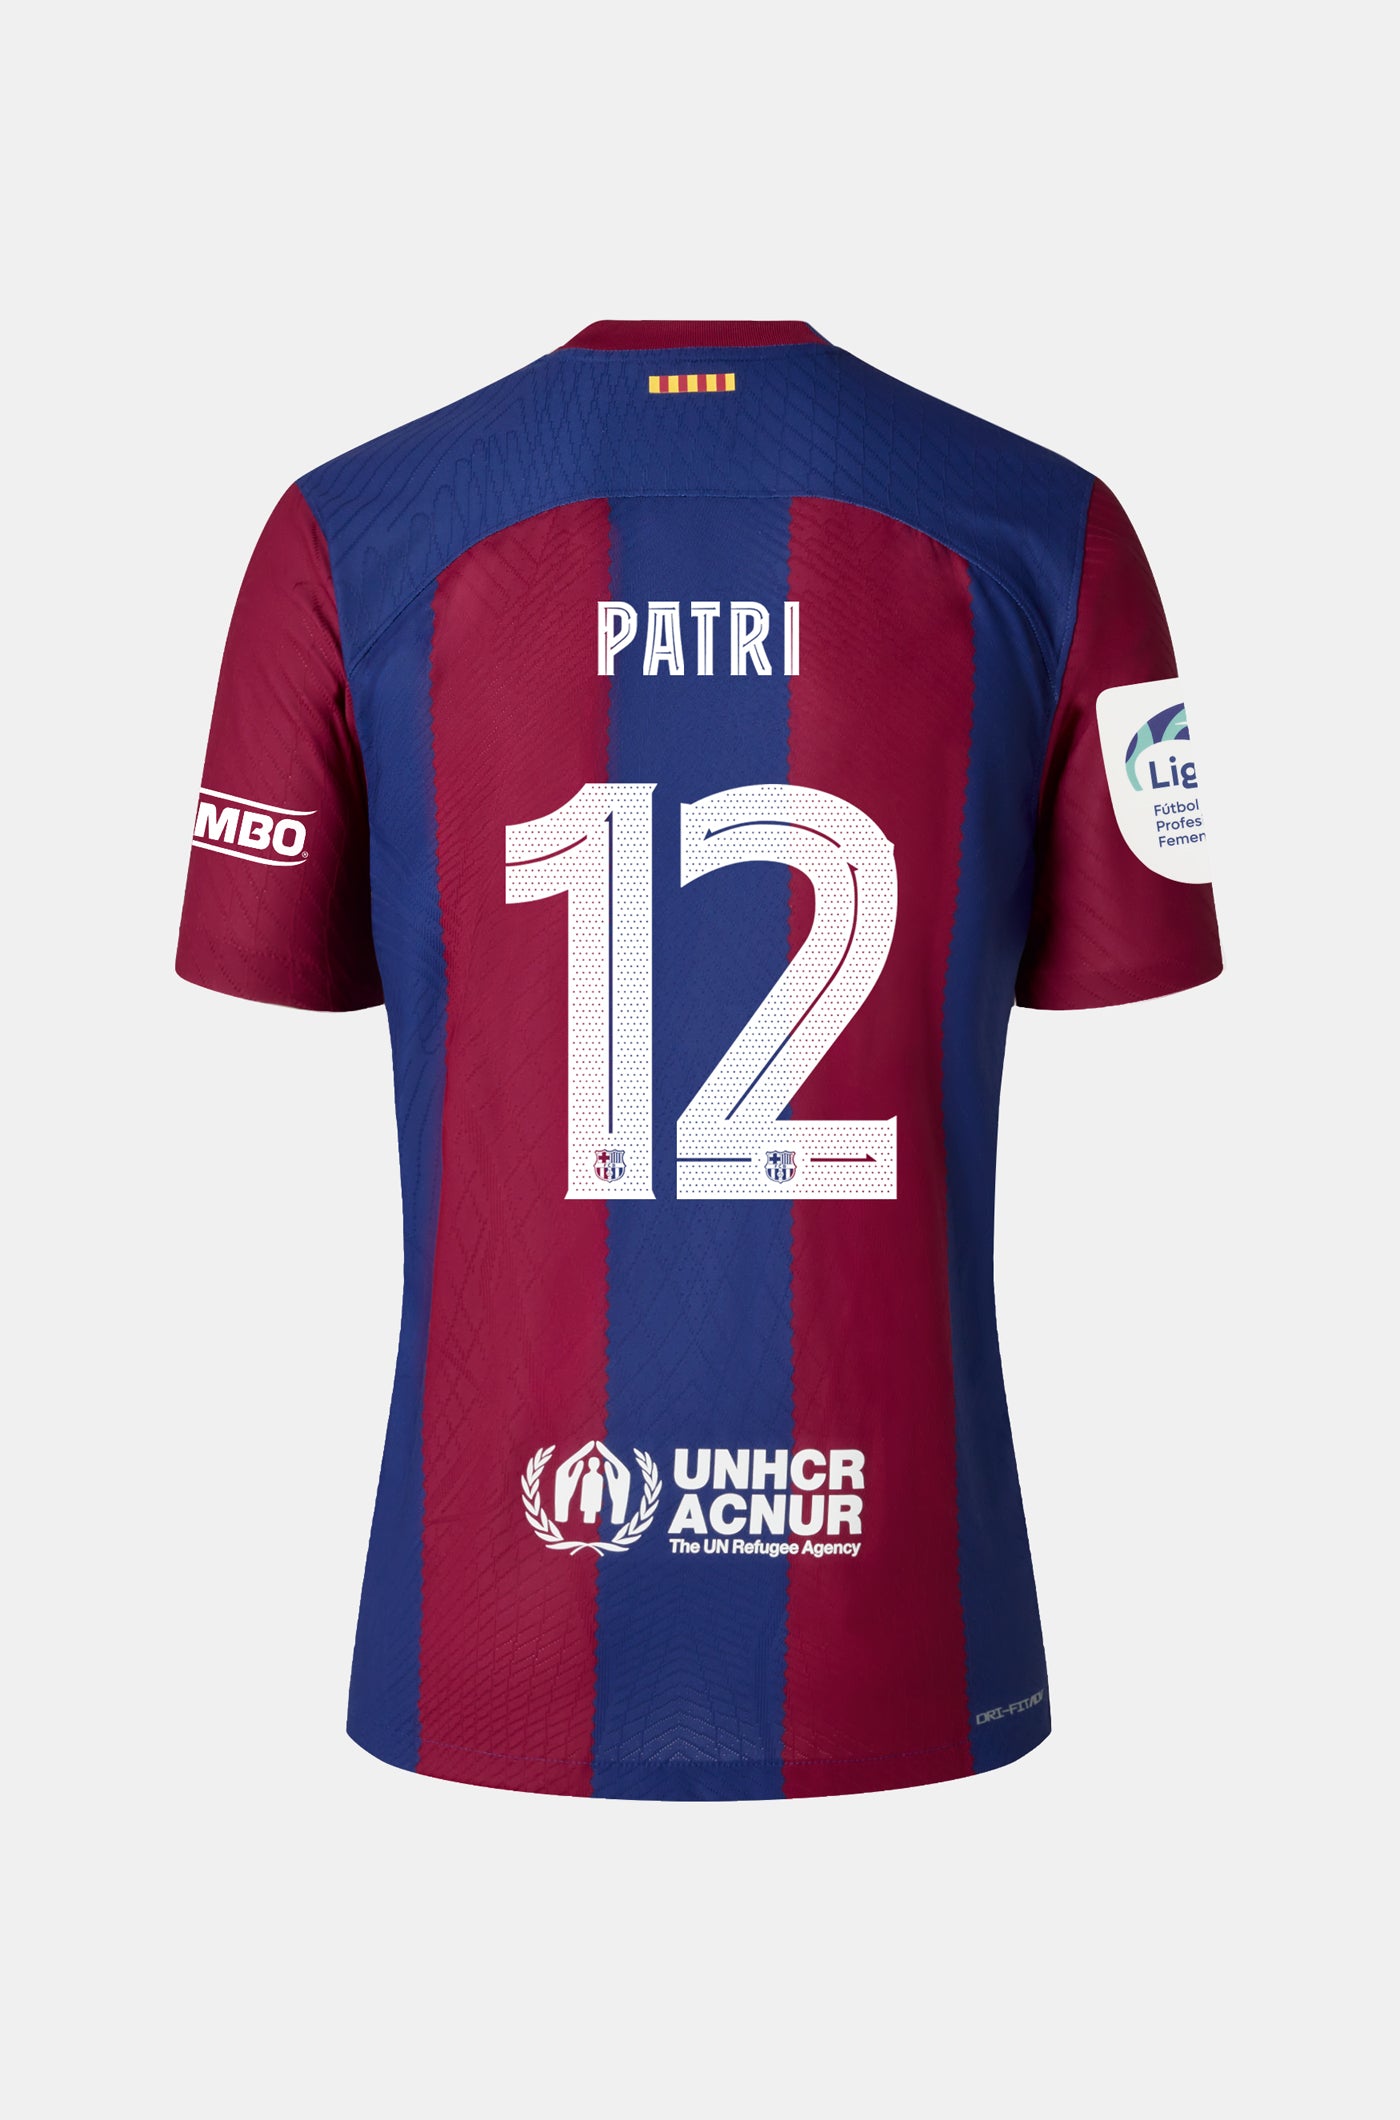 Liga F FC Barcelona home shirt 23/24 Player's Edition - PATRI